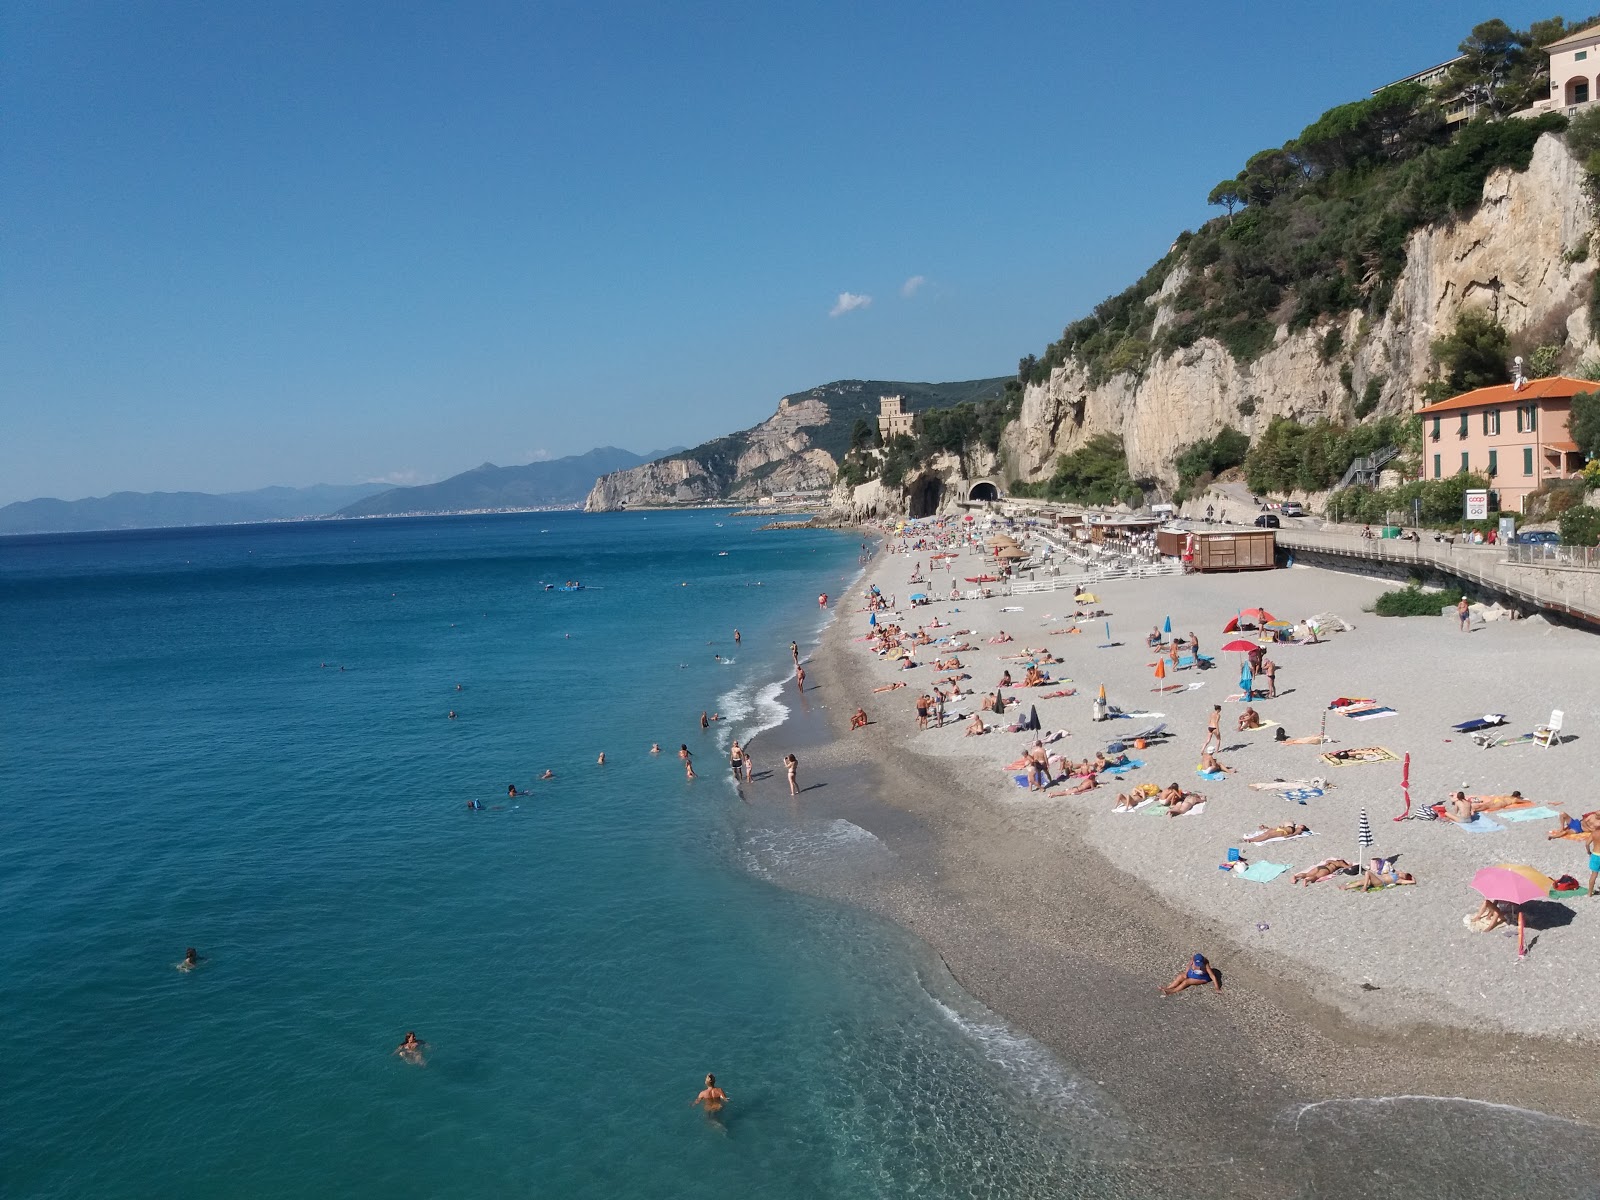 Foto de Spiaggia libera del Castelletto com pebble fina cinza superfície